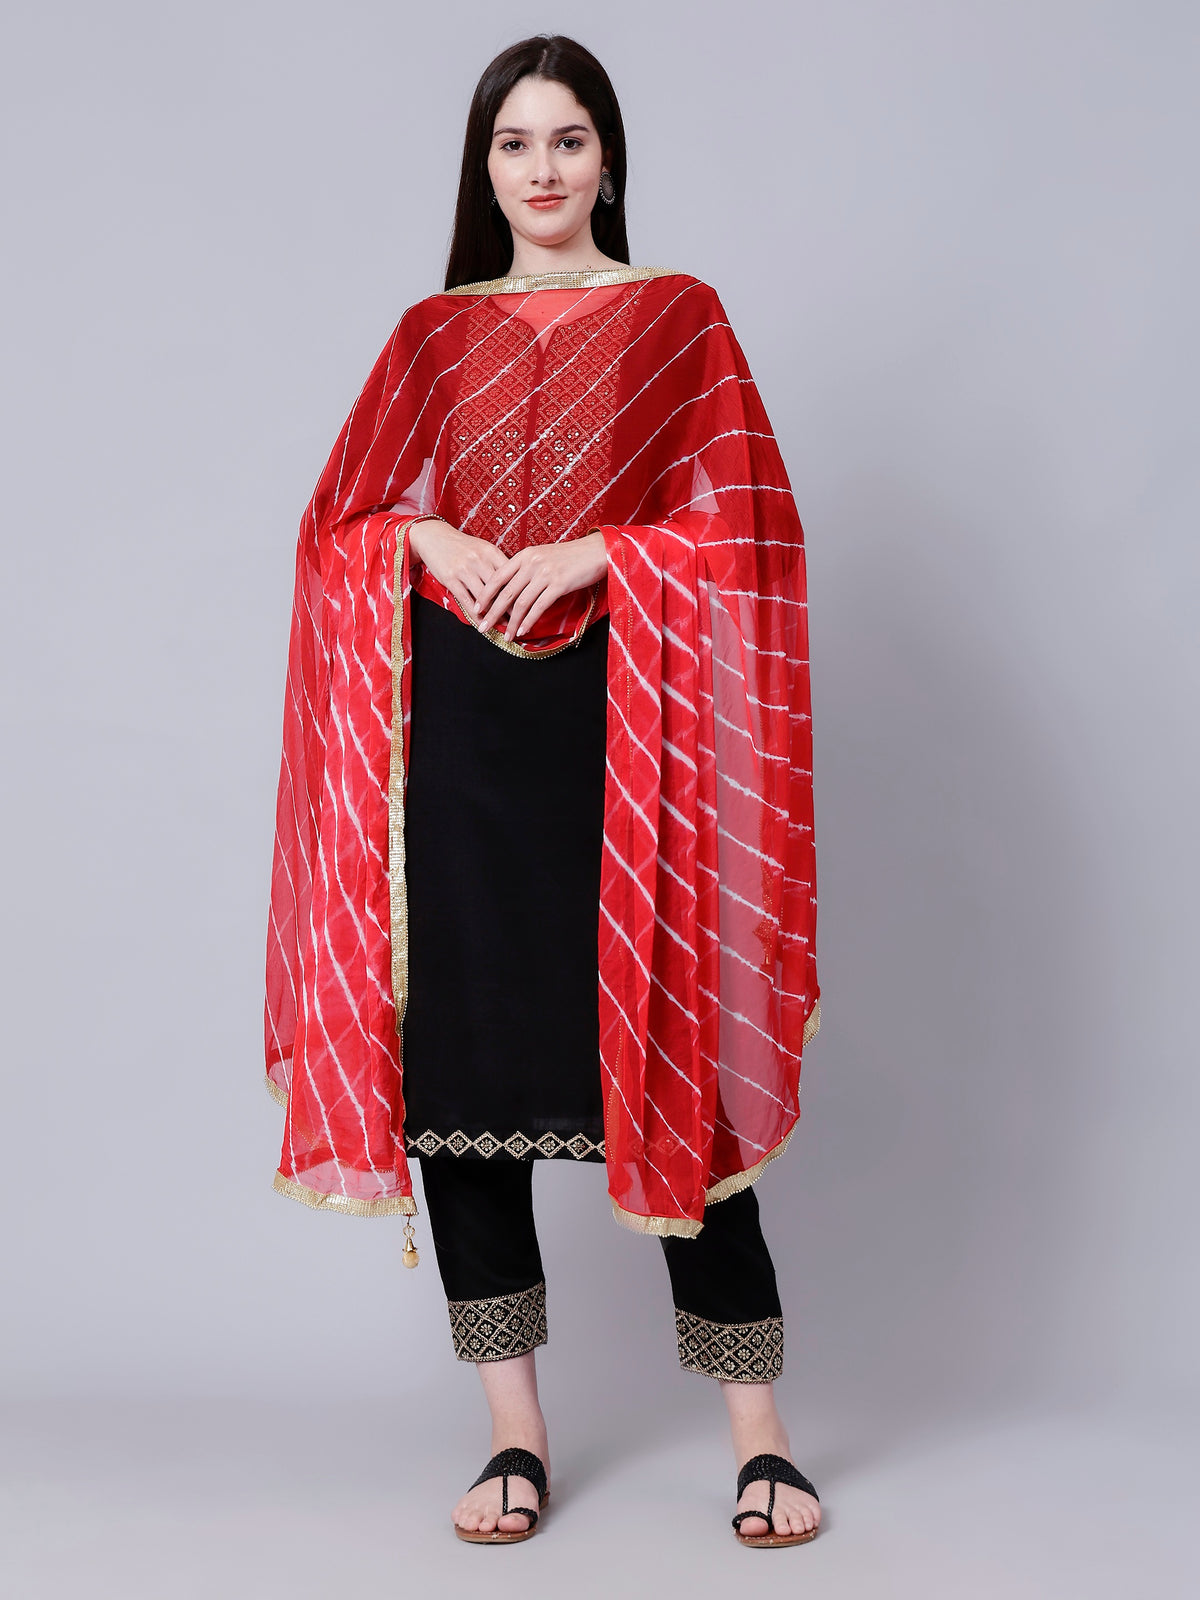 Jaipuri Chiffon Red Ethnic Bandhani Print Striped Dupatta with Golden Lace Border